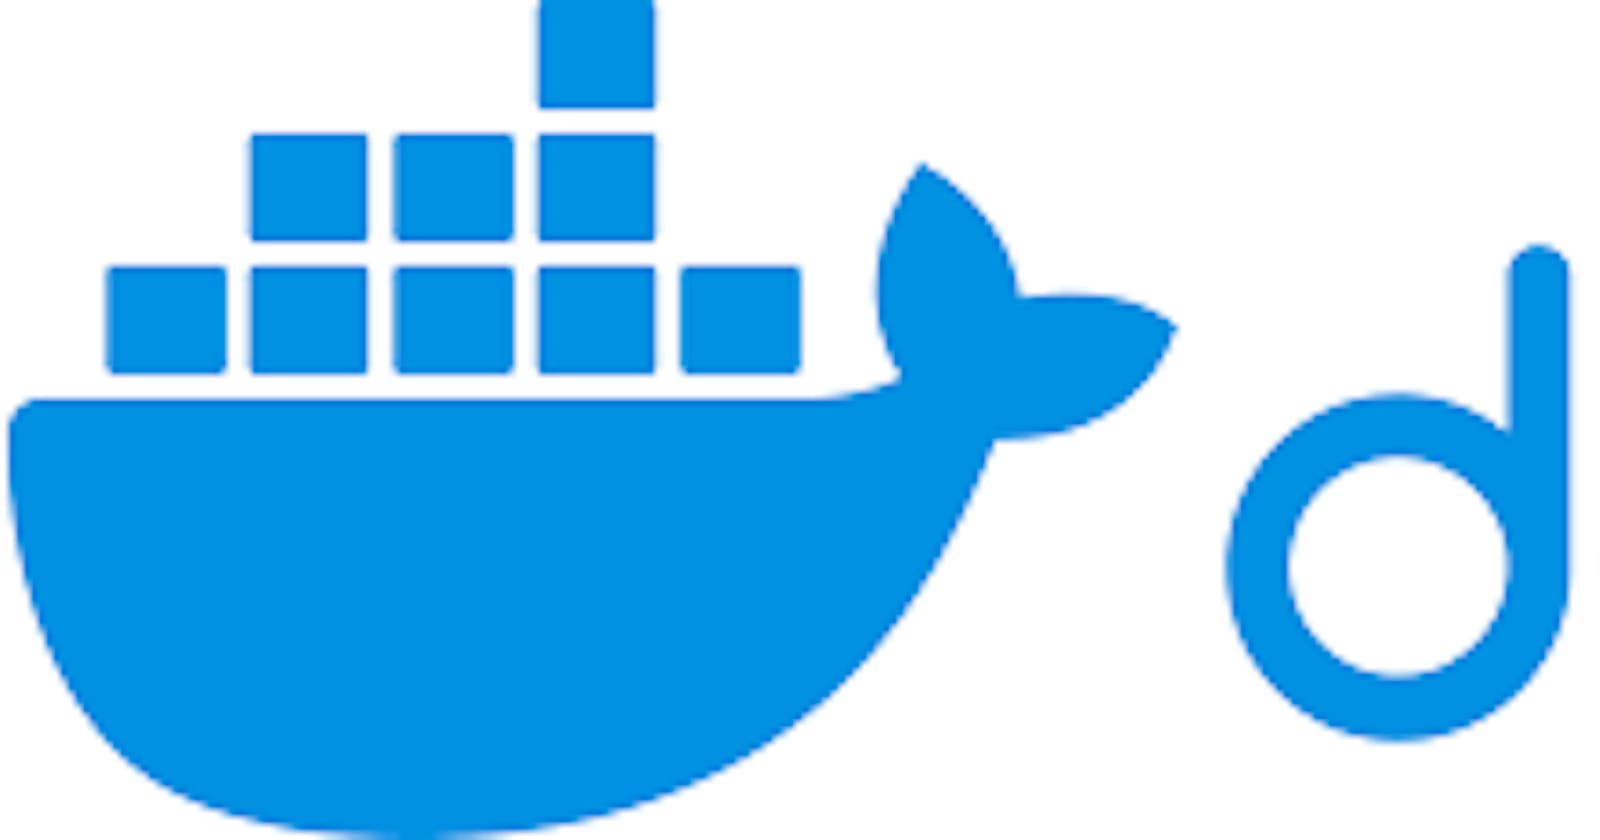 Running APEX in Docker container